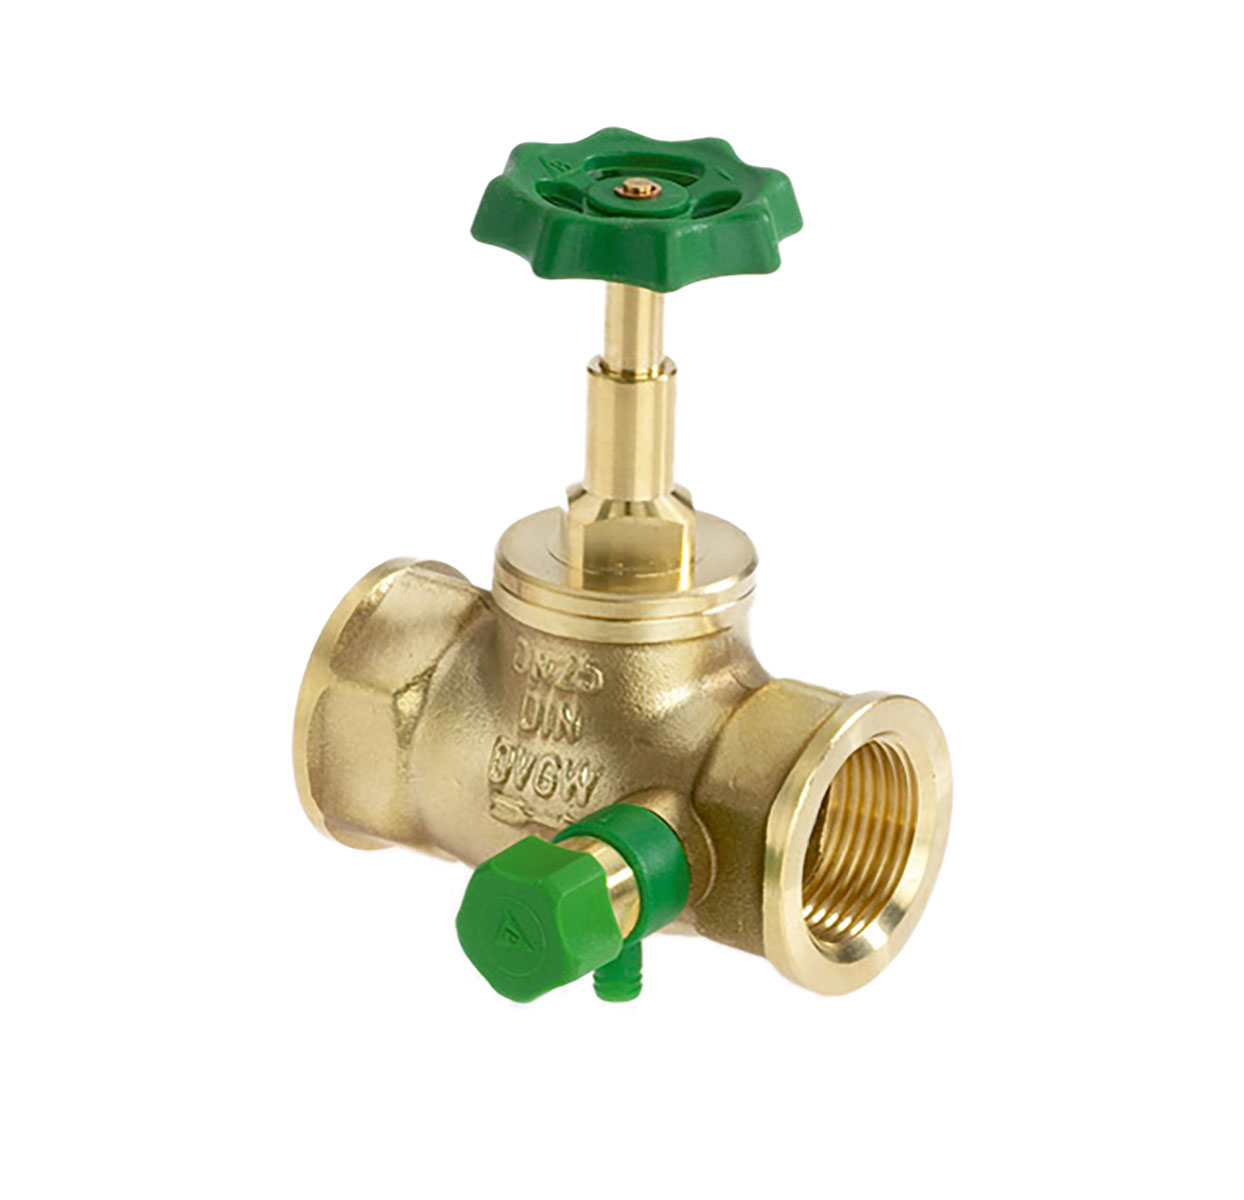 1304200 - CR-Brass Globe valve with drain valve, rising